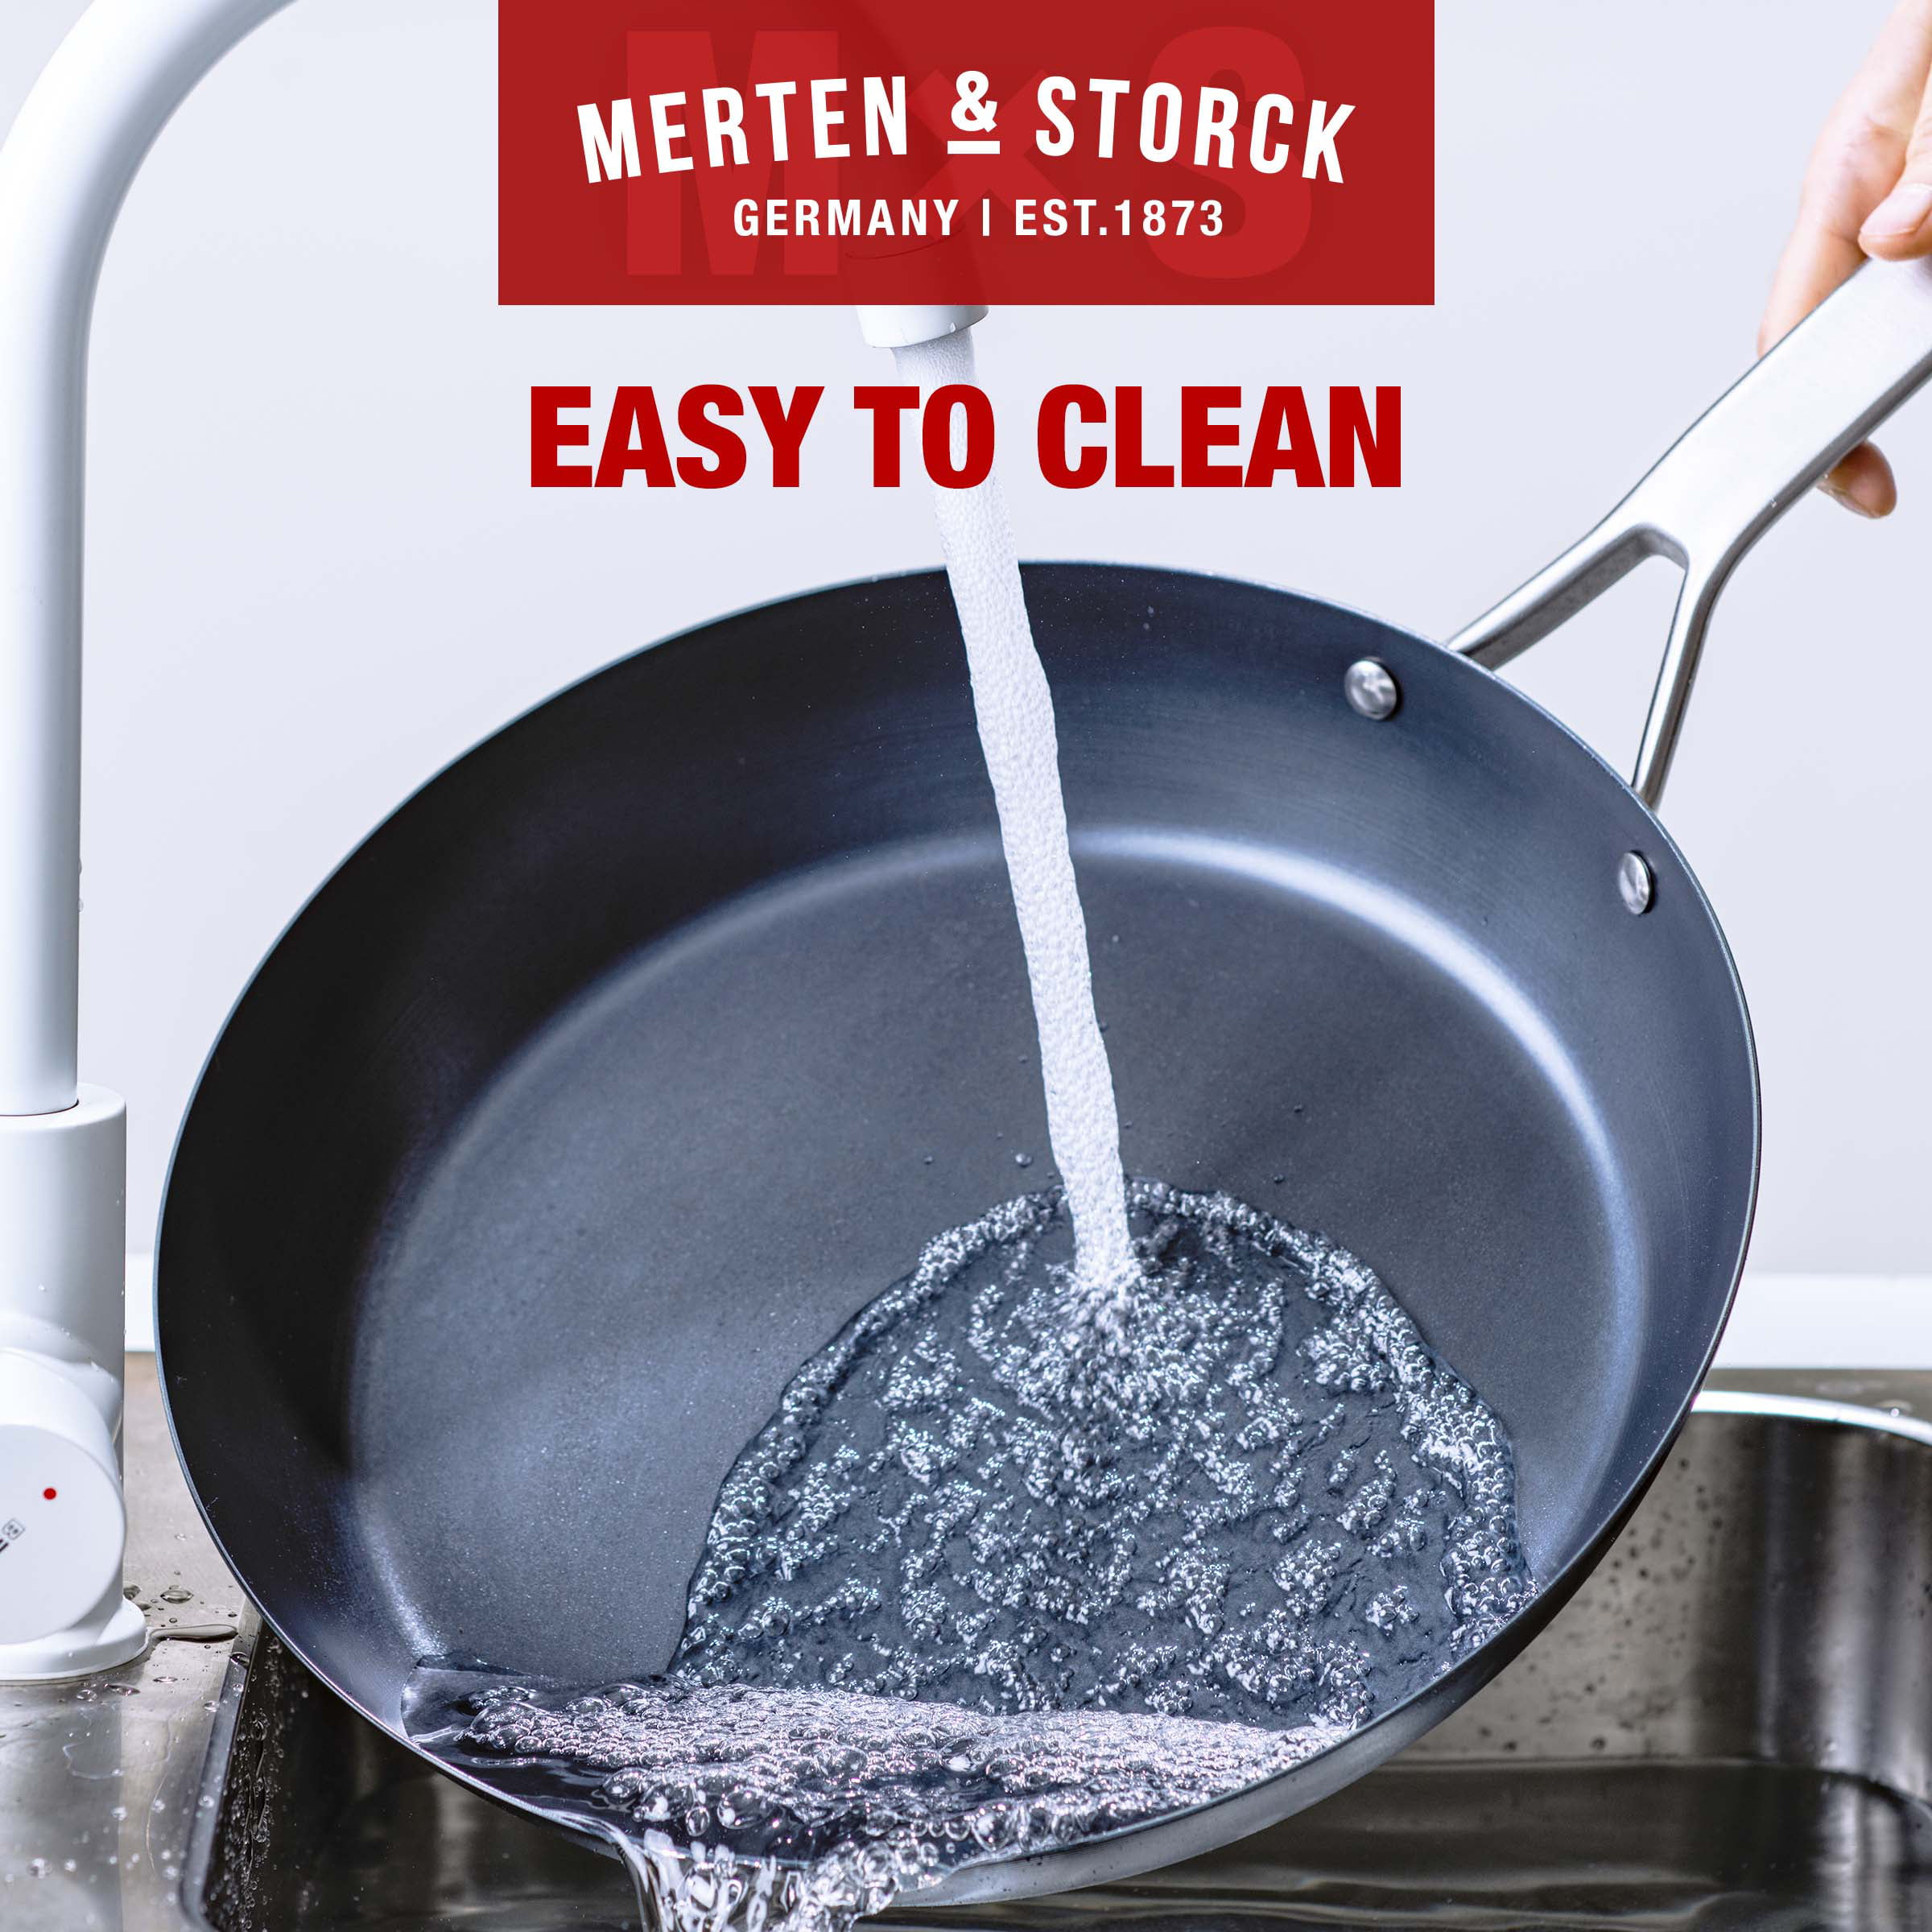 Merten & Storck Carbon Steel Fry Pan 12 Inch